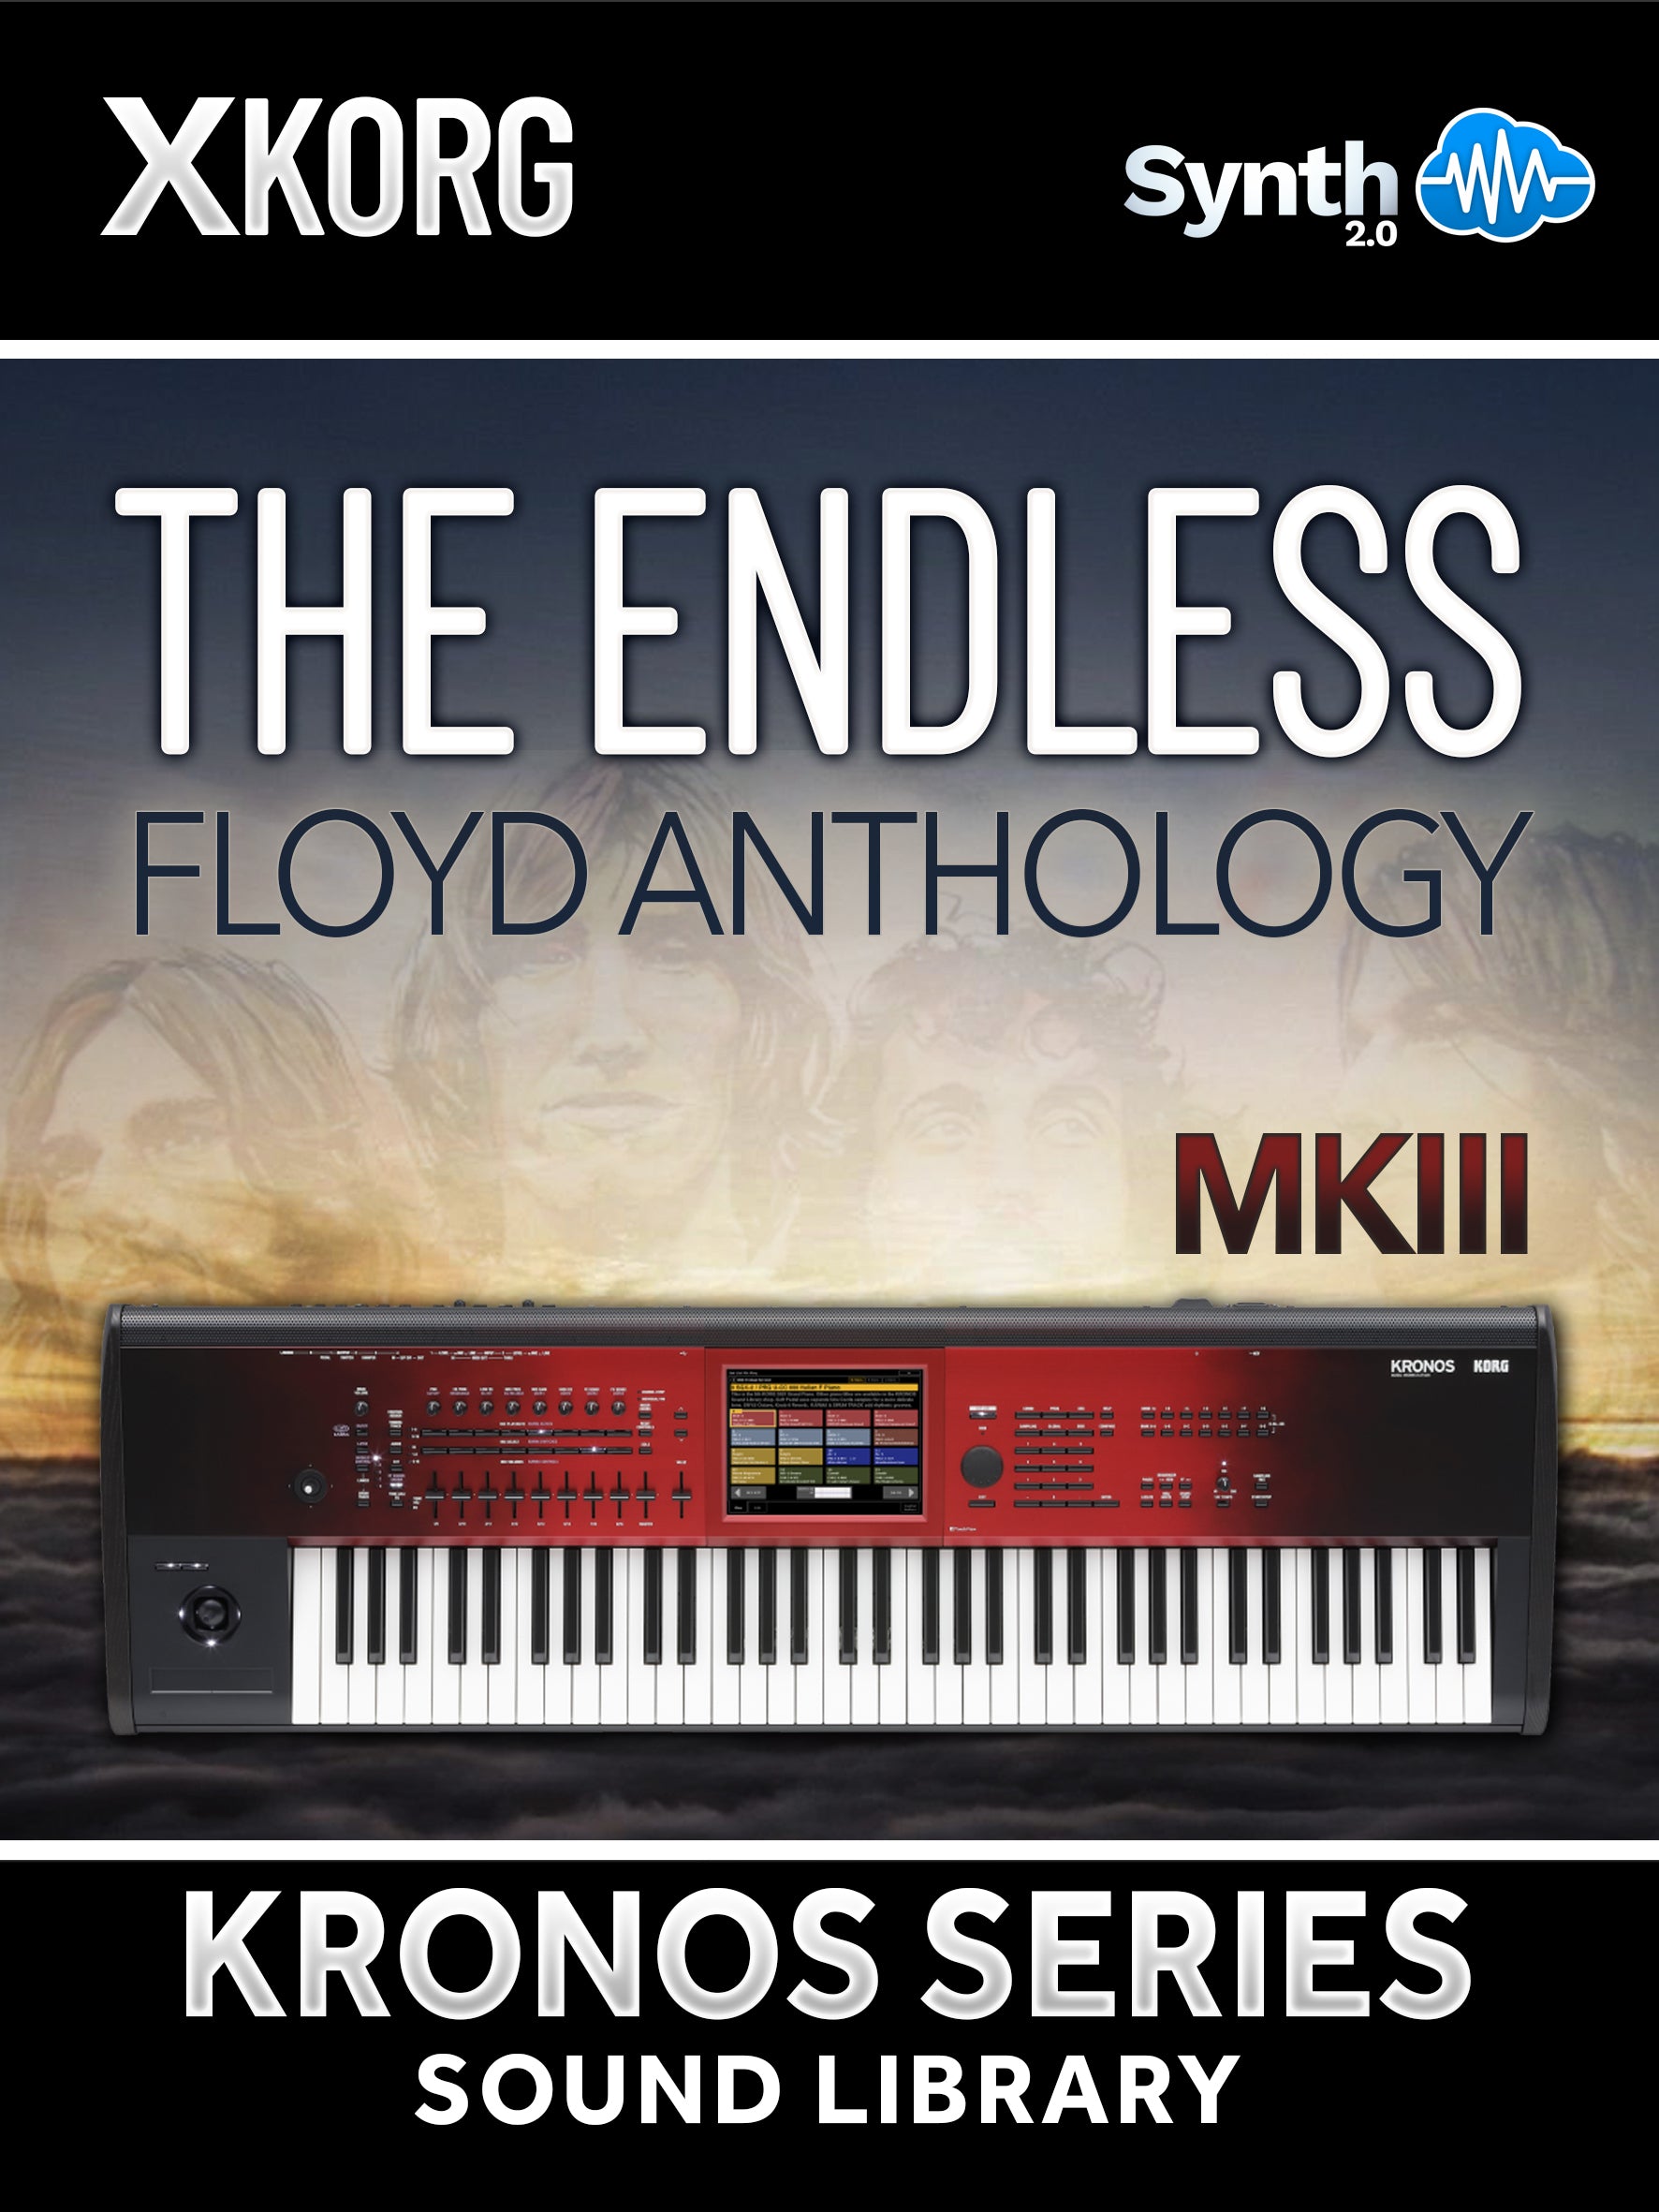 SSX008 - The Endless Floyd Anthology MKIII - Korg Kronos / X / 2 / Platinum / Ls + Bonus 